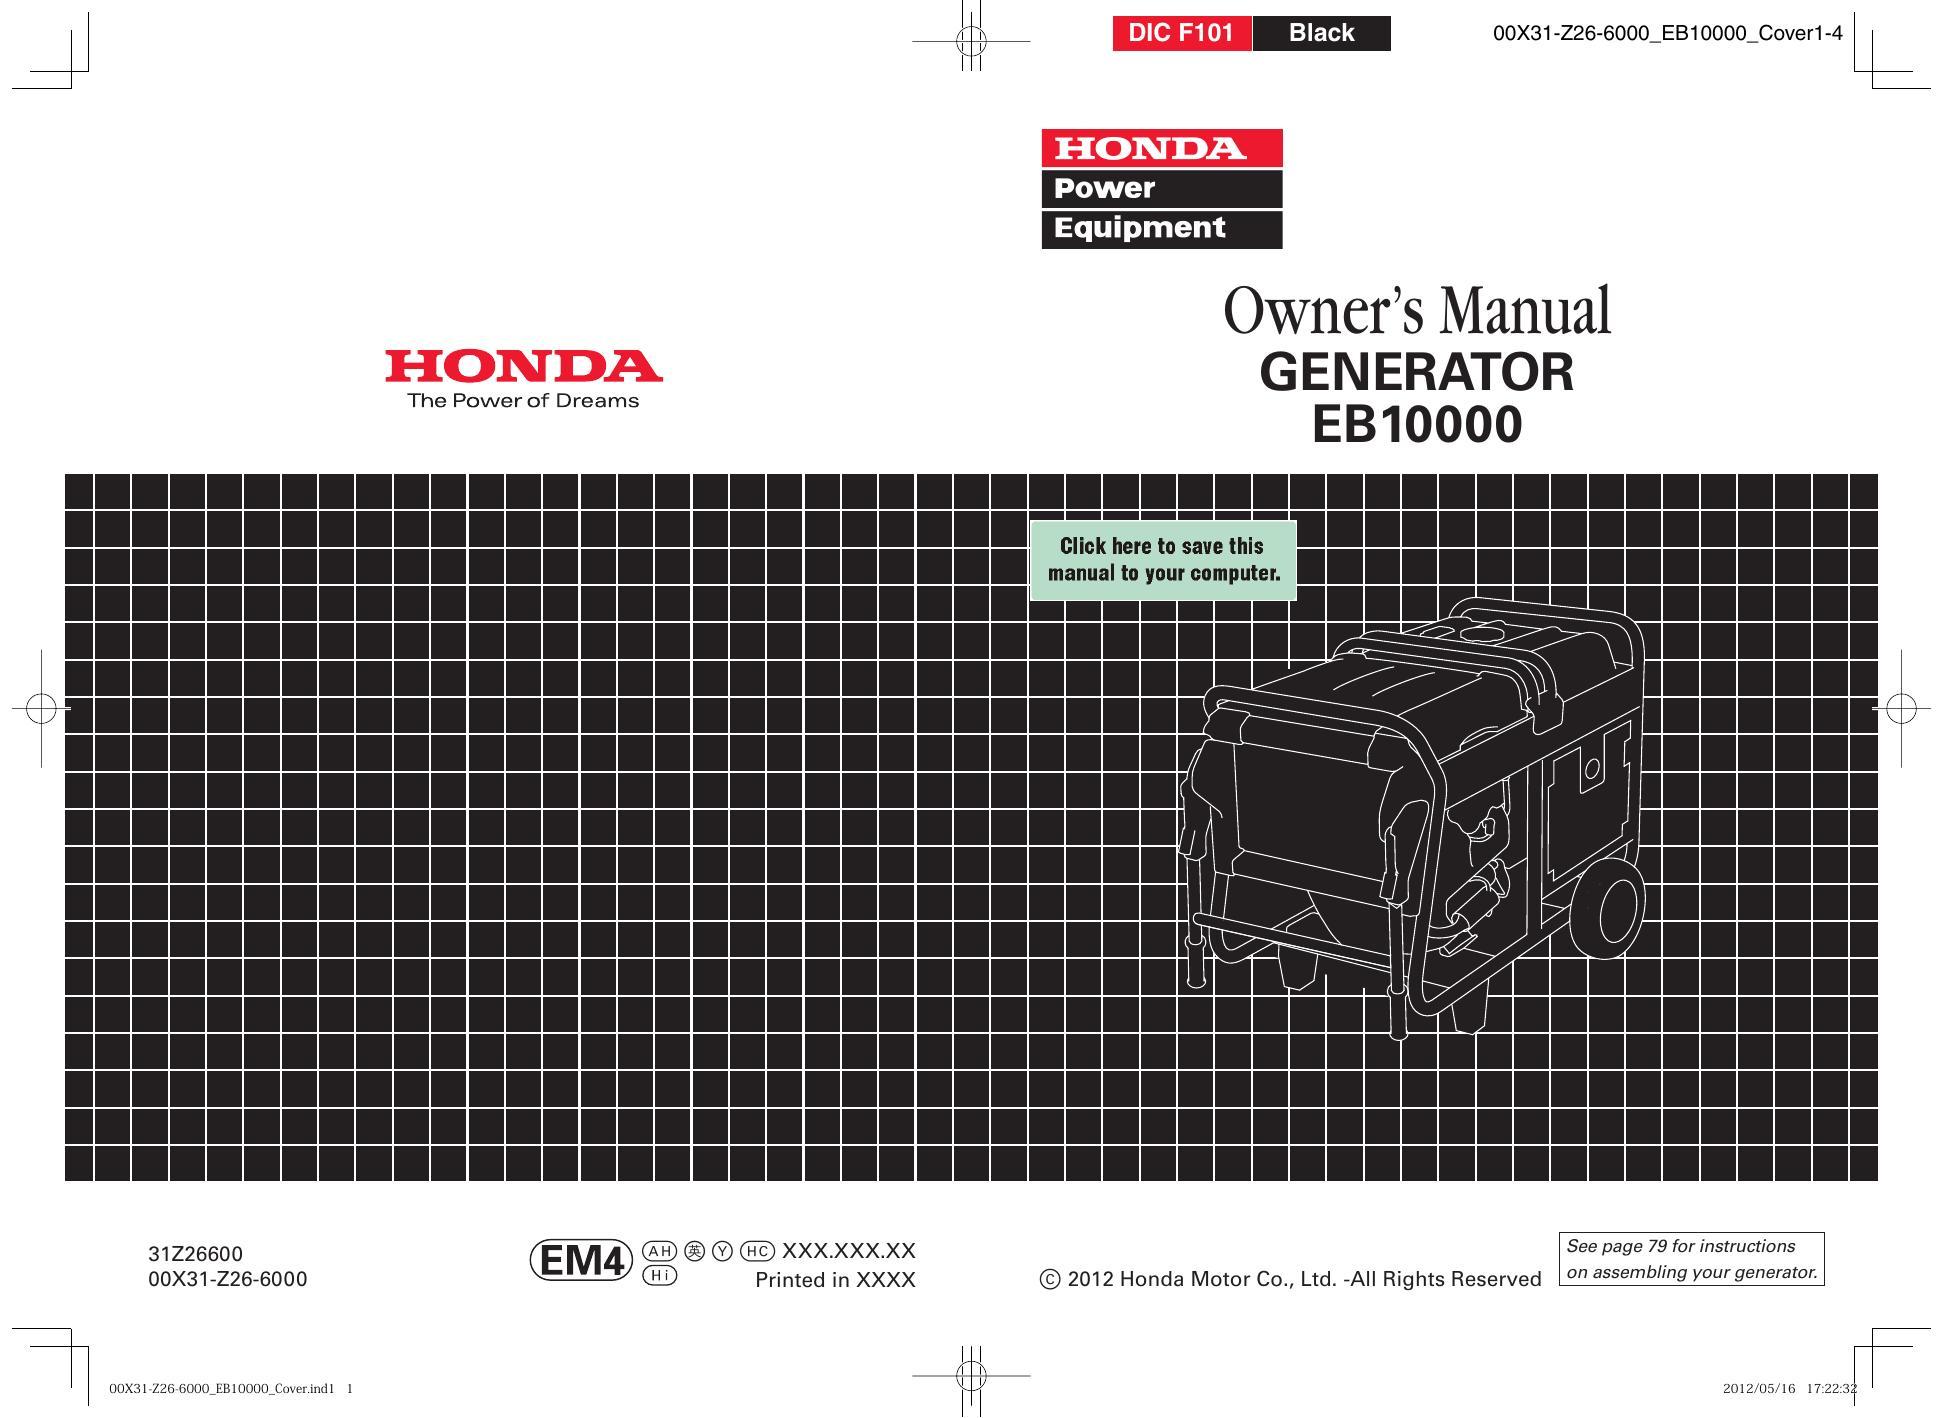 owners-manual-generator-eb100000.pdf